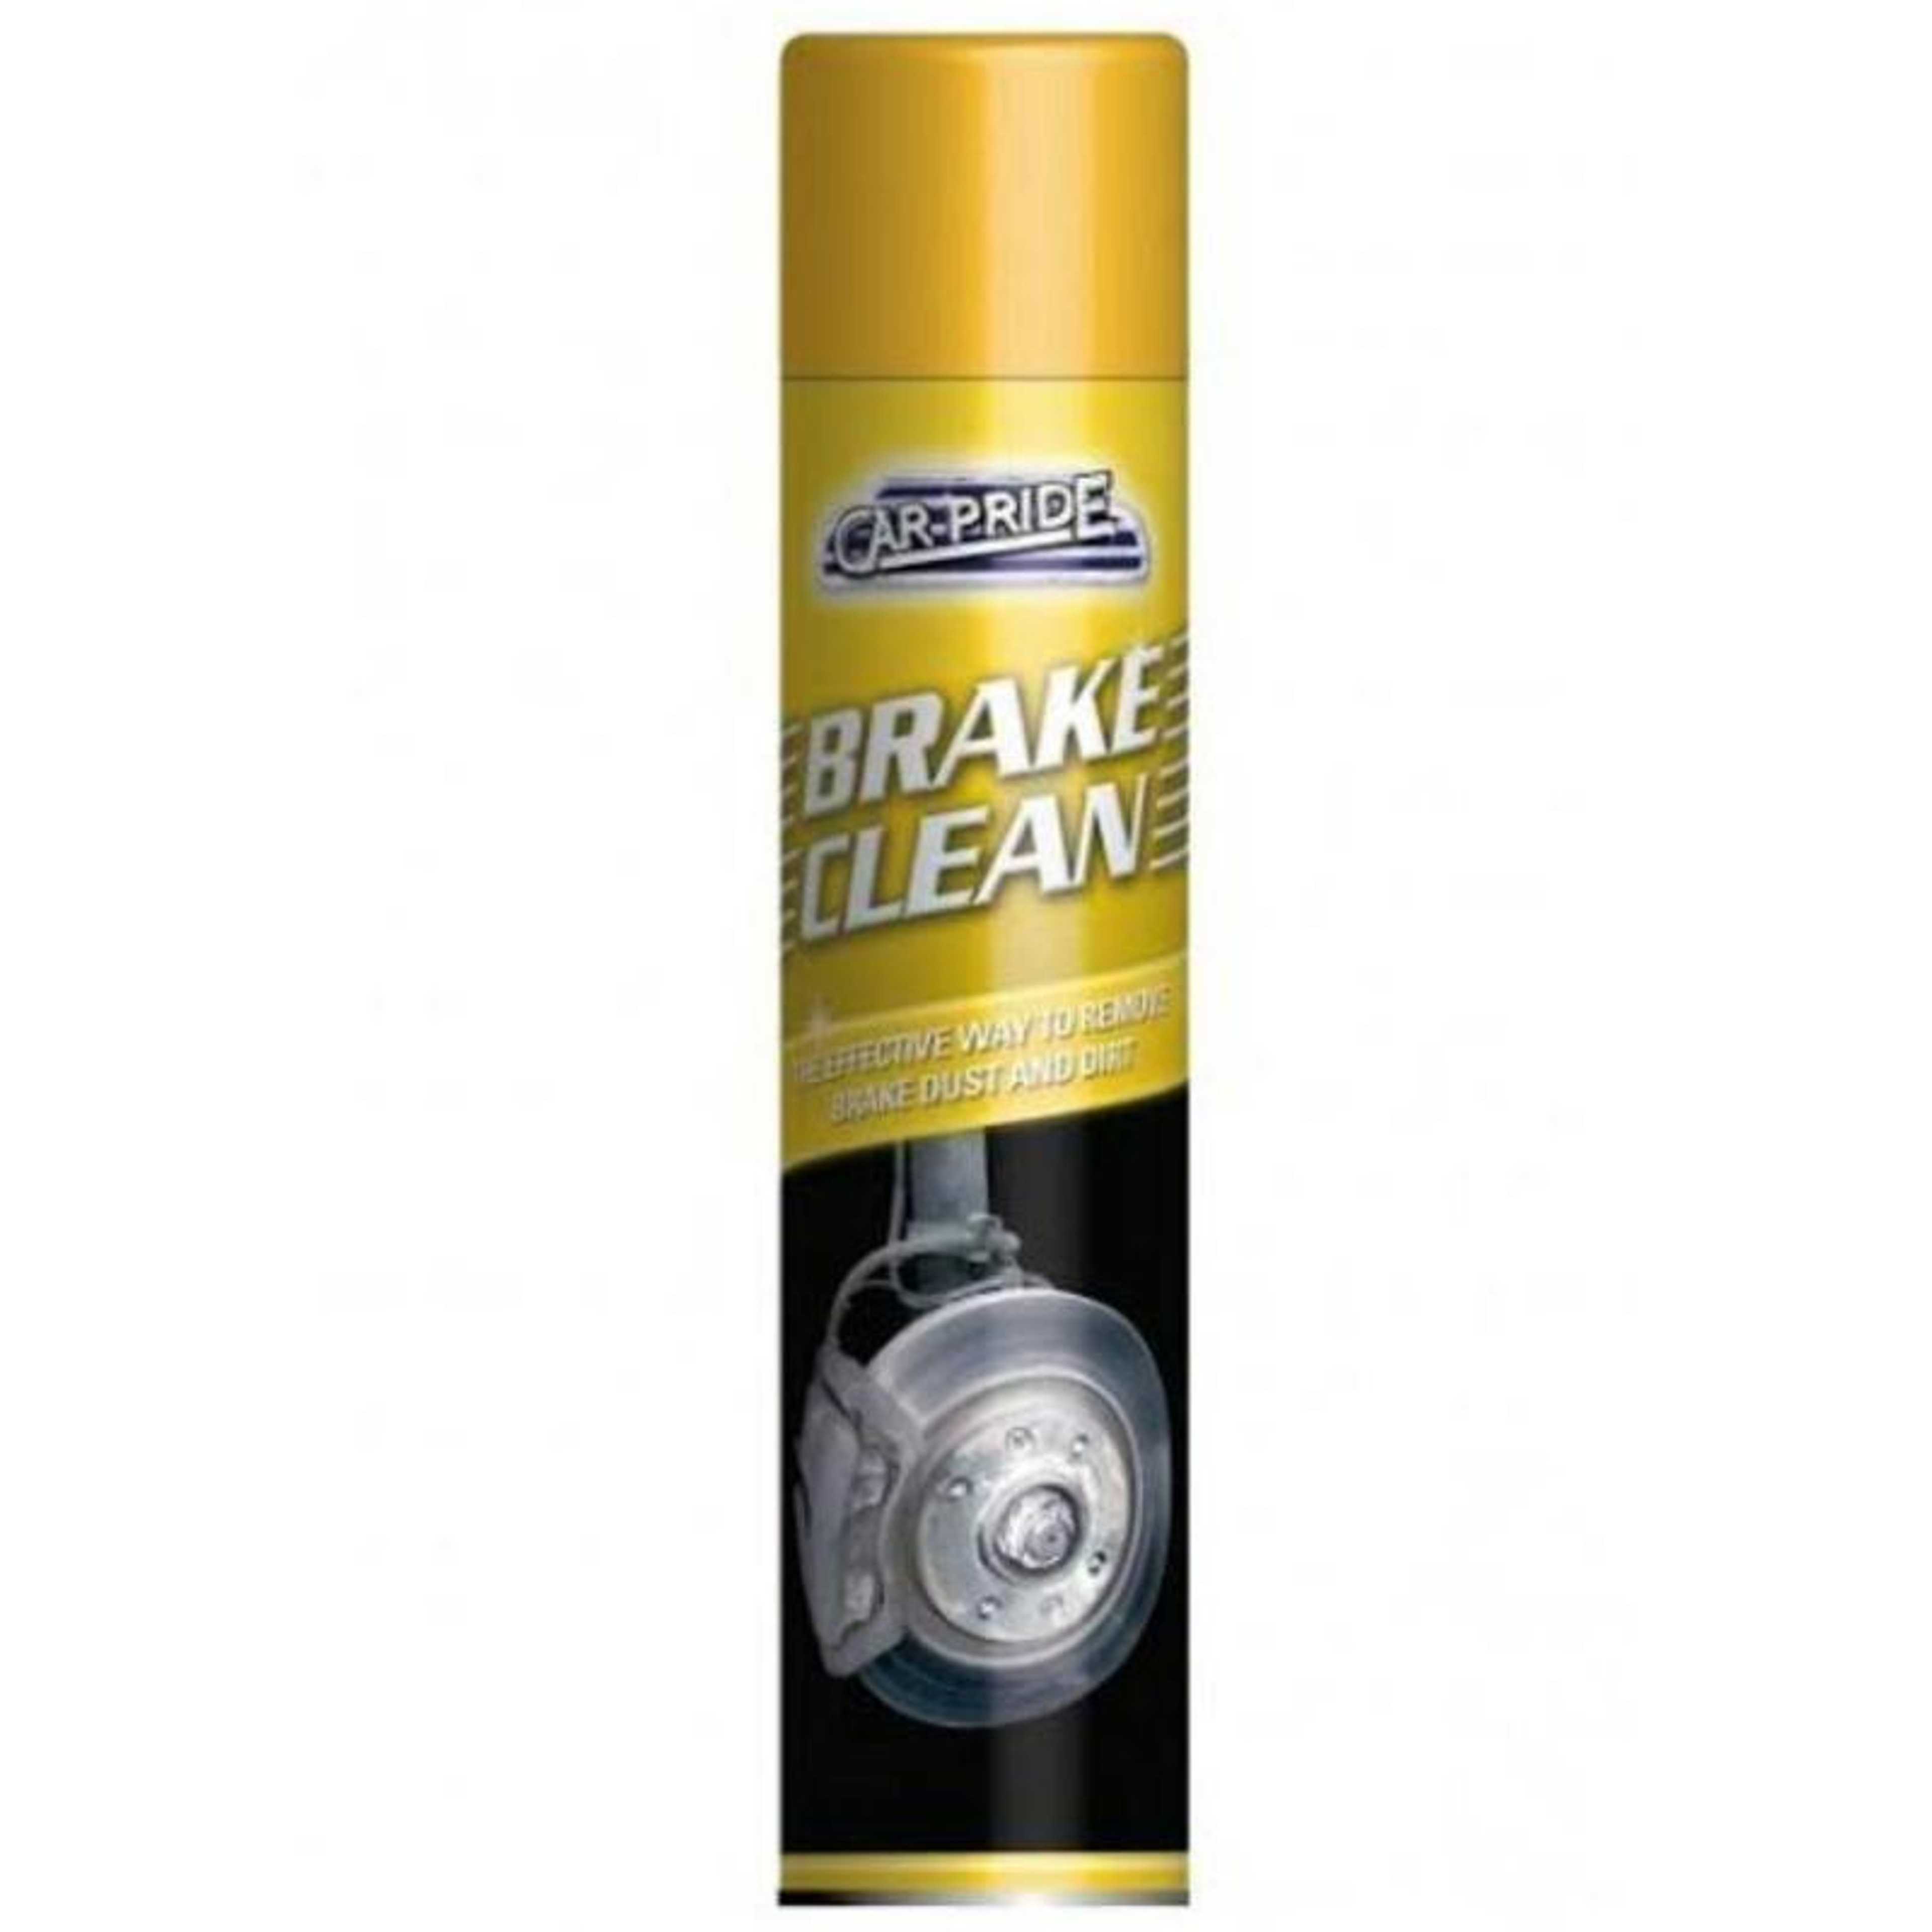 Car Pride Brake Clean Spray 250Ml